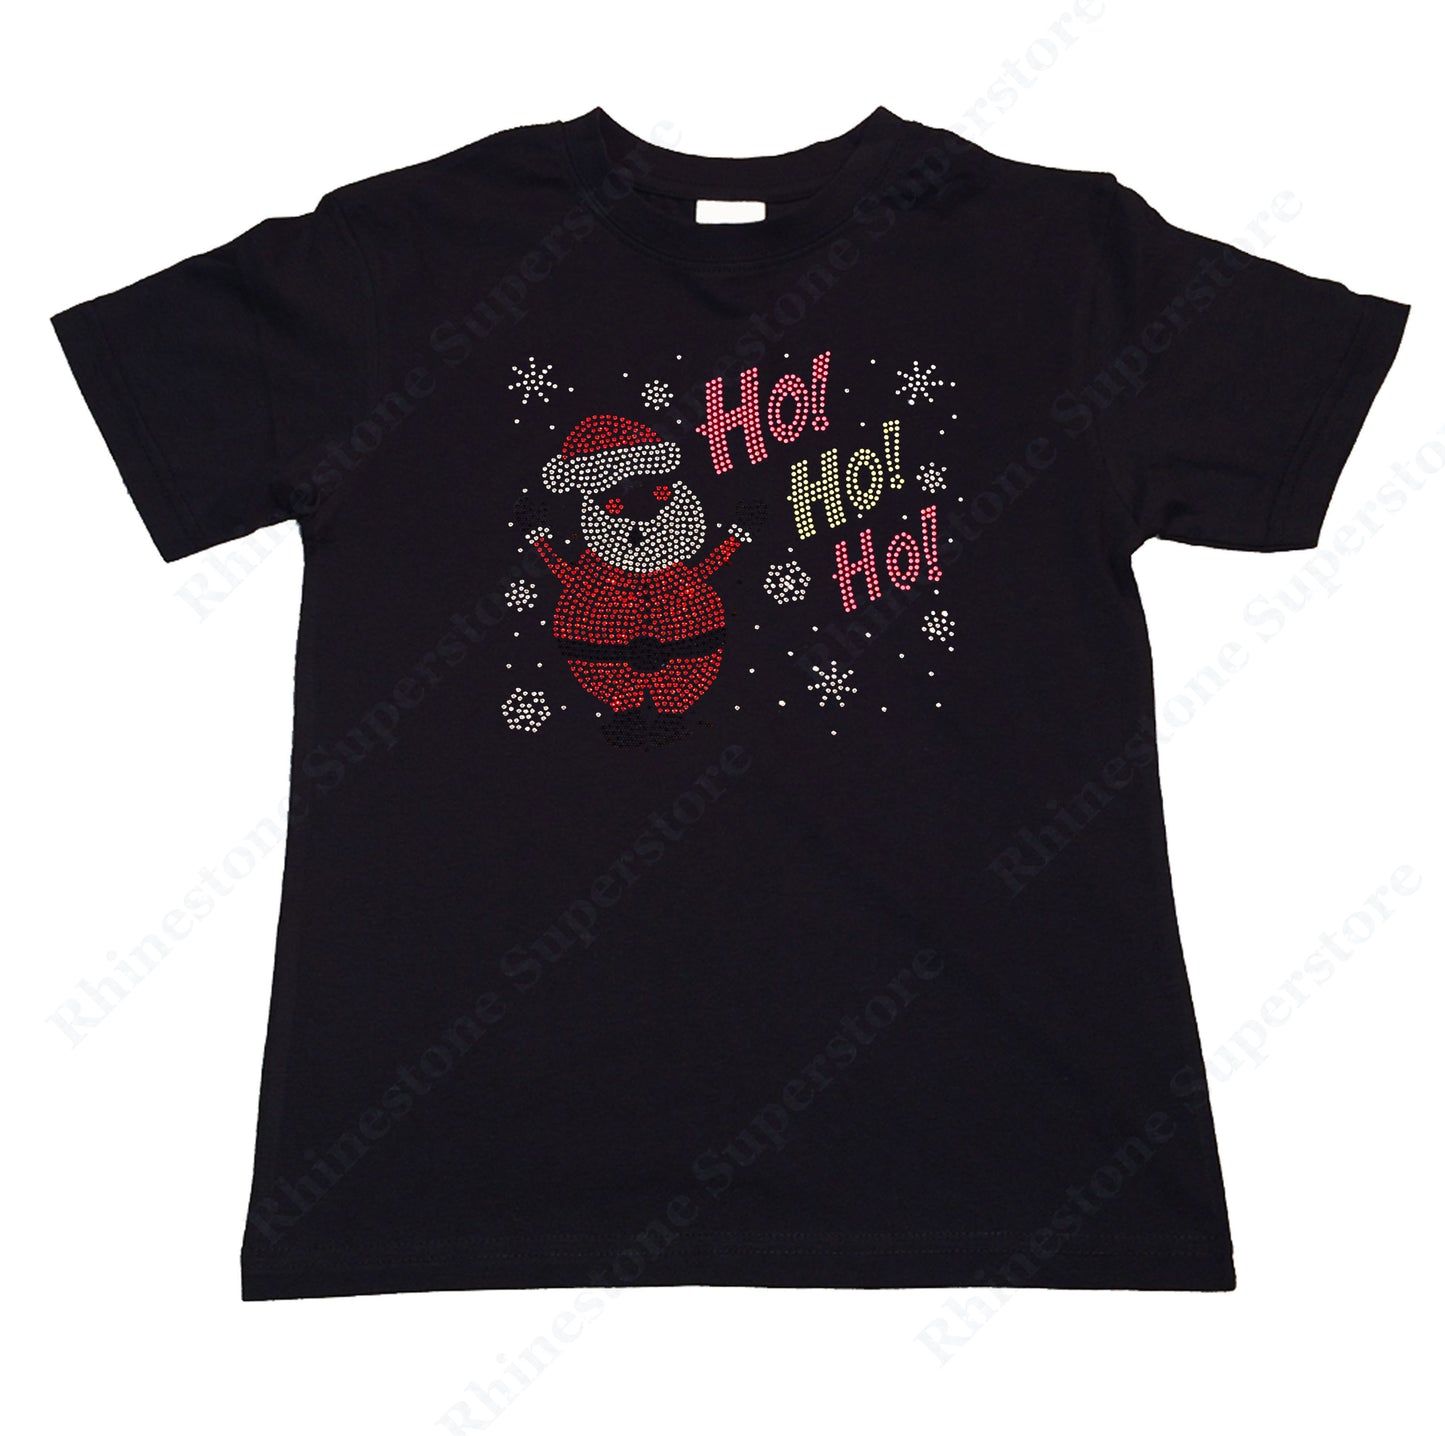 Girls Rhinestone T-Shirt " Santa with Ho Ho Ho in Rhinestones " Kids Size 3 to 14 Available